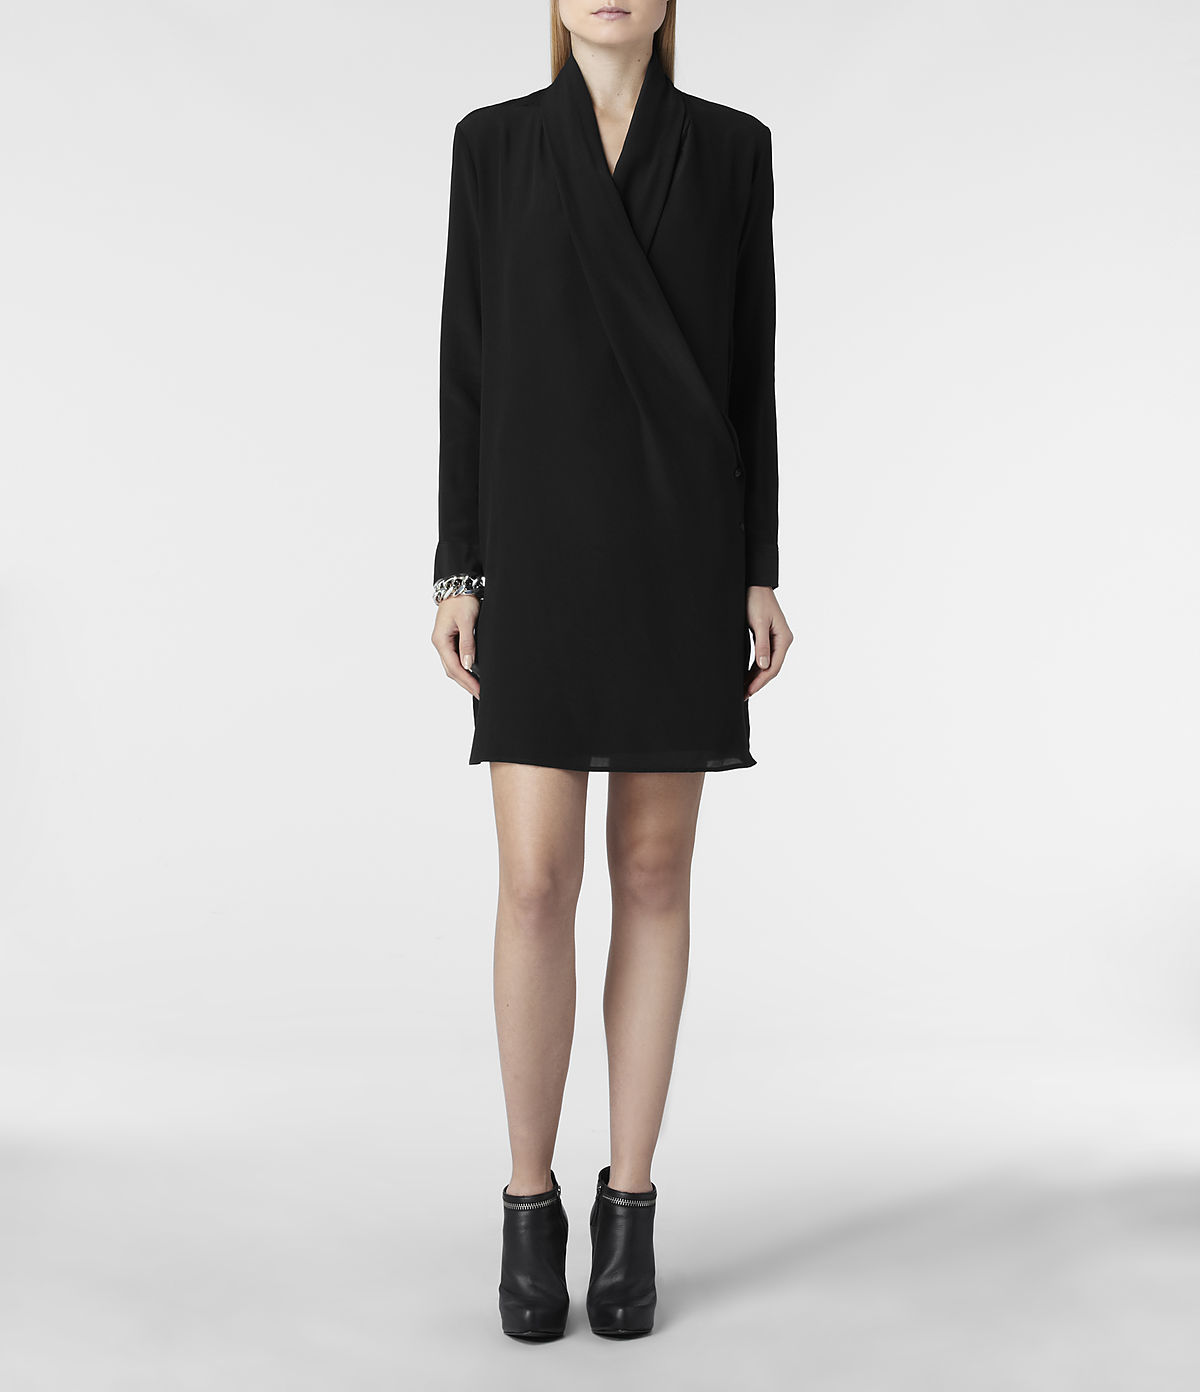 Lyst - AllSaints Serra Shirt Dress in Black